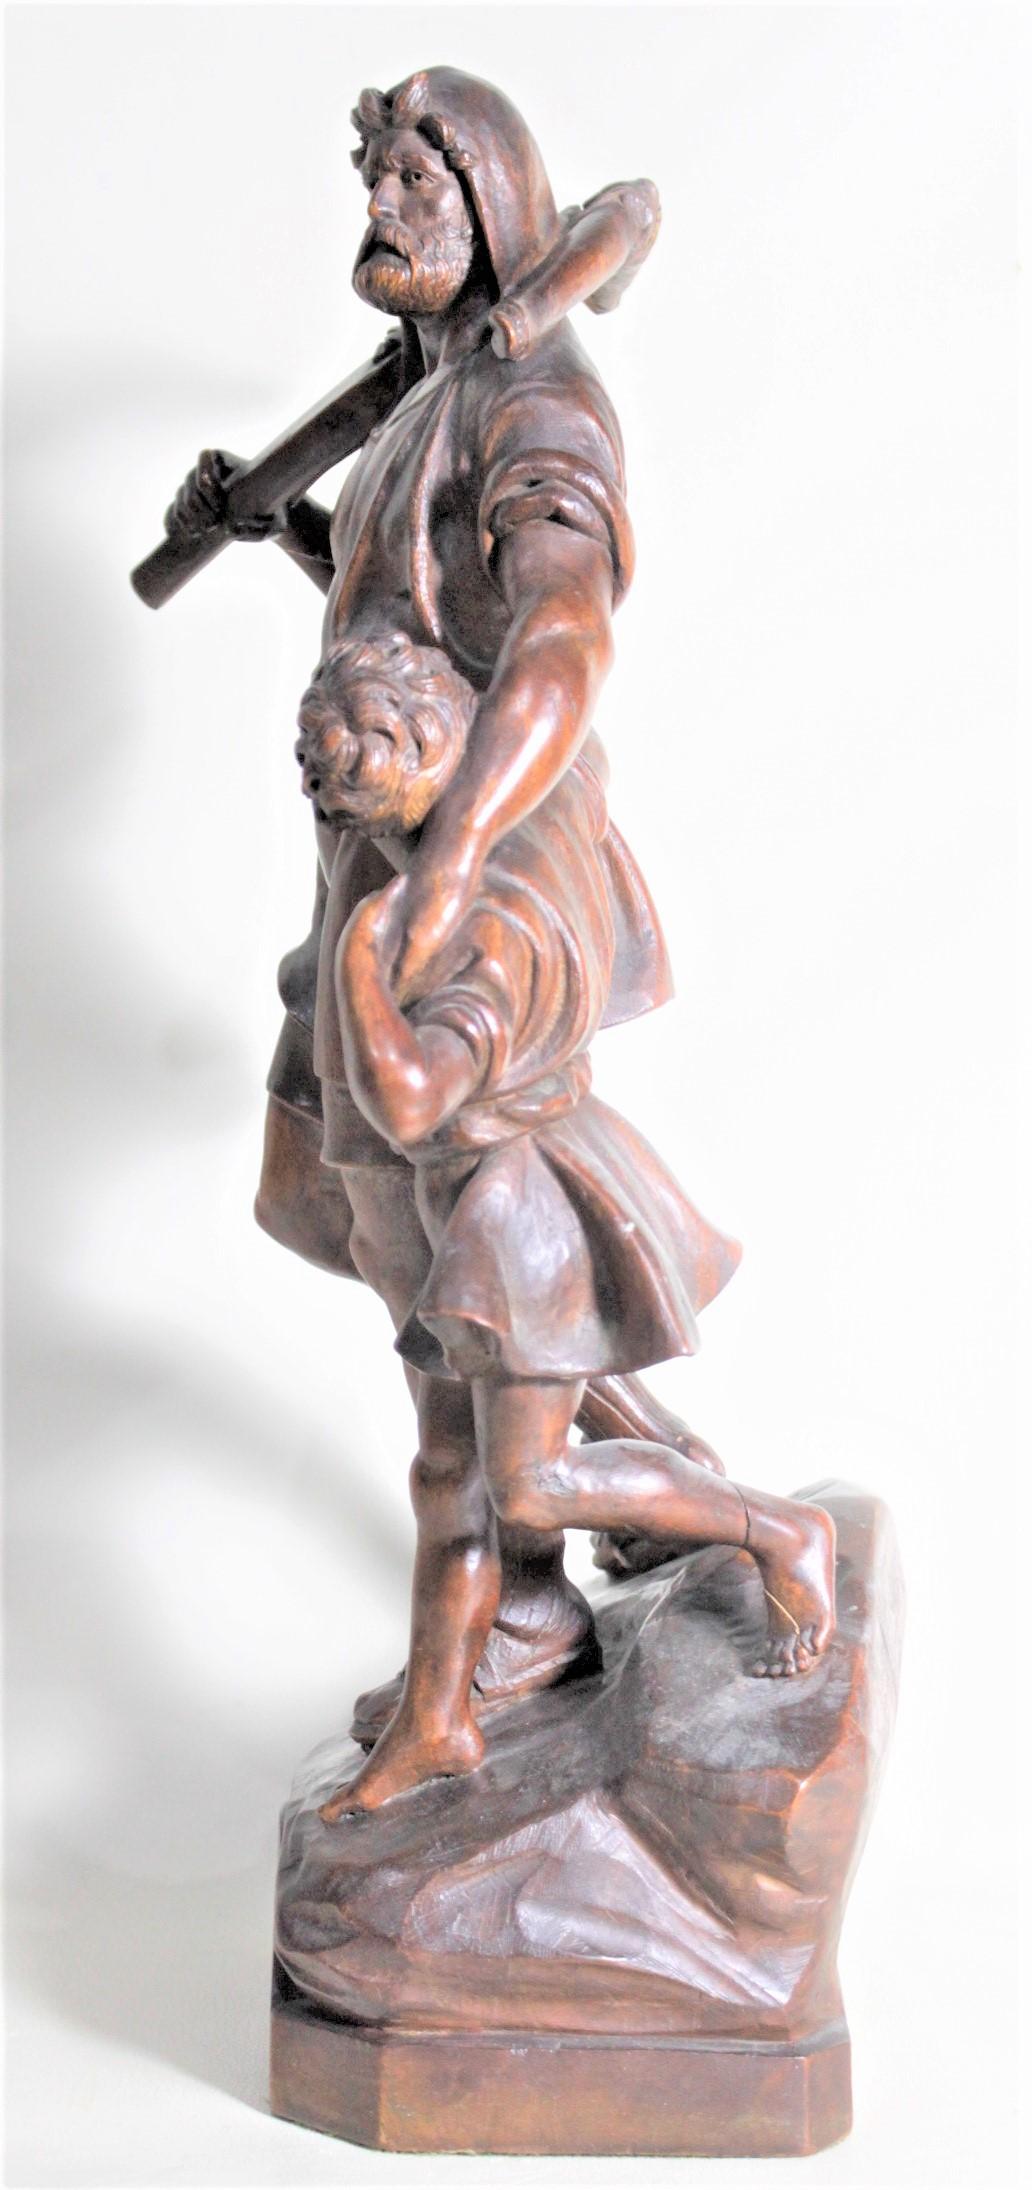 Antique Folk Art Hand Carved 'William Tell' & Boy Wooden Figurative Sculpture 1